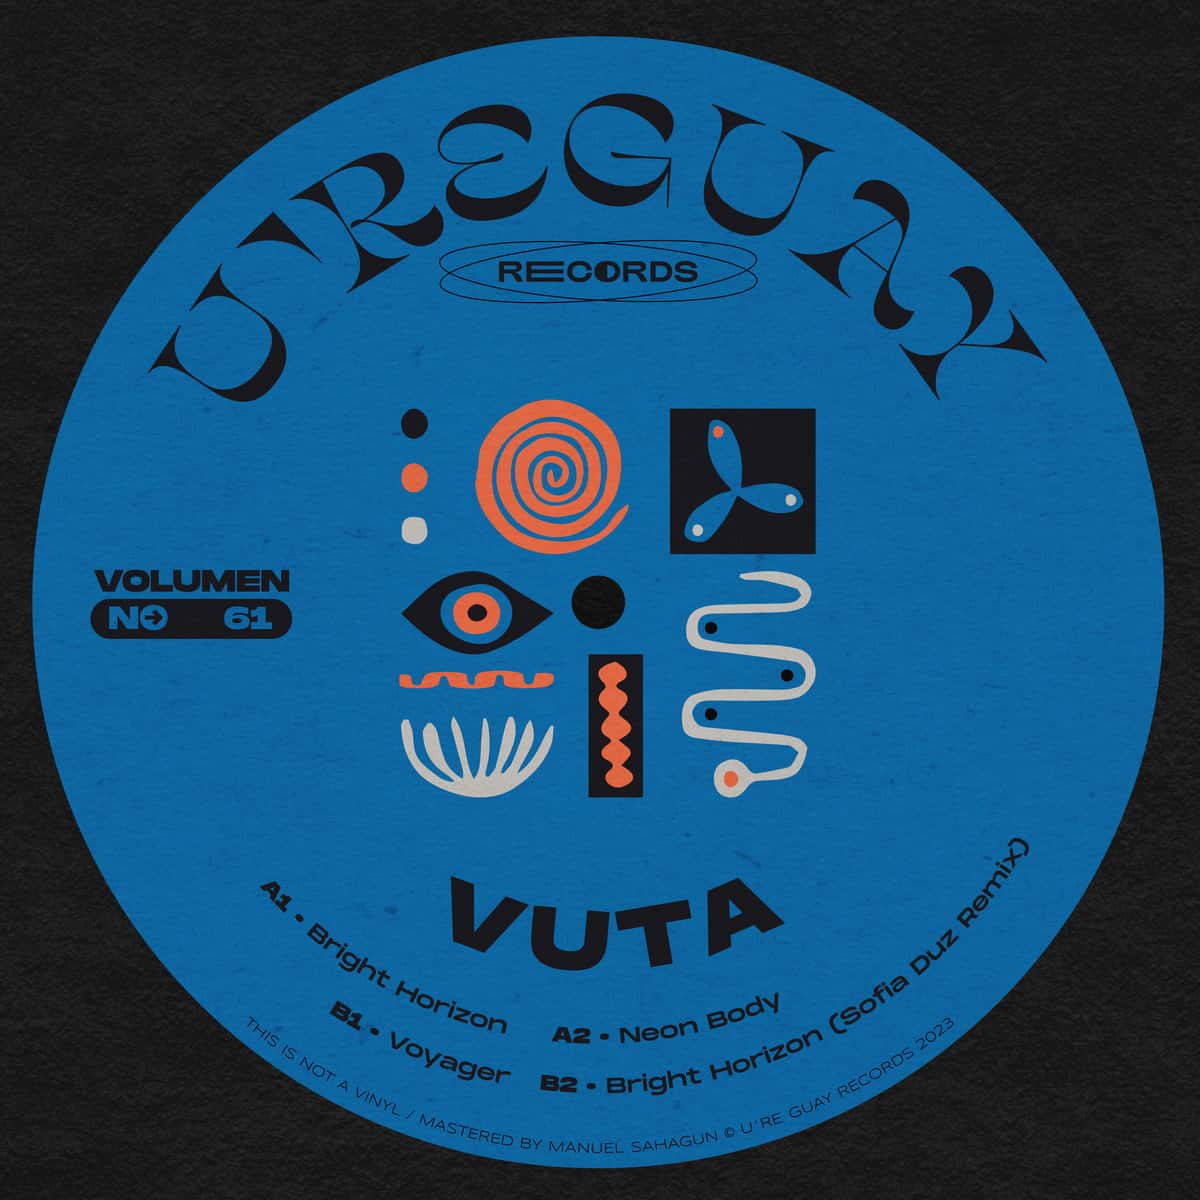 Download Vuta - U're Guay Vol. 61 on Electrobuzz